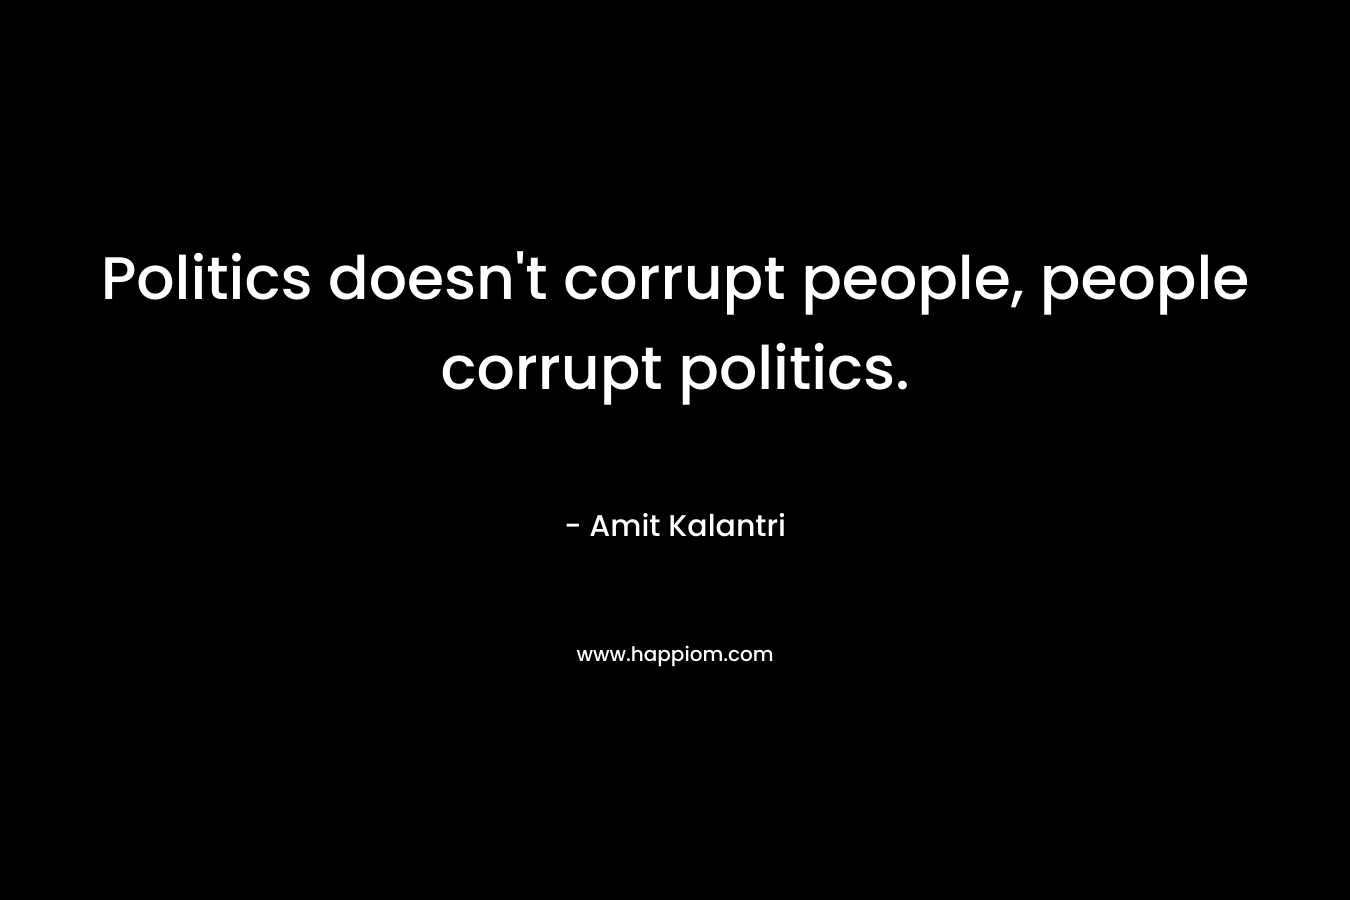 Politics doesn't corrupt people, people corrupt politics.